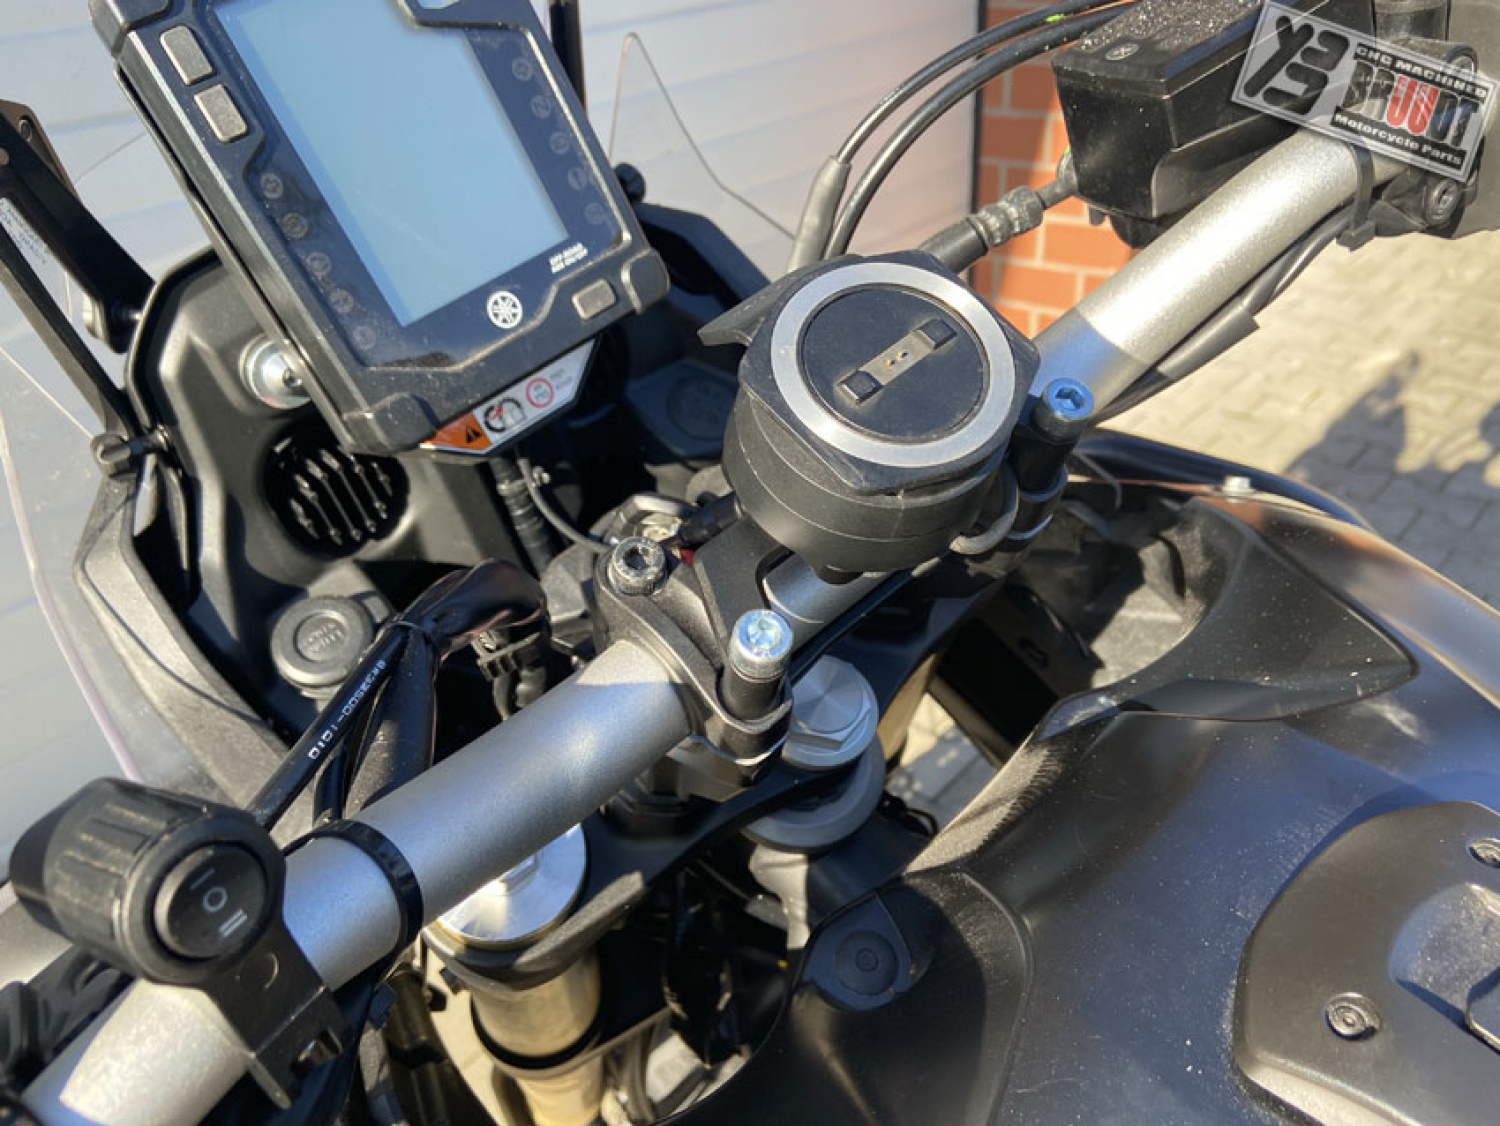 BRUUDT TomTom Rider halter für Honda CB500F und CB500X ab 2019